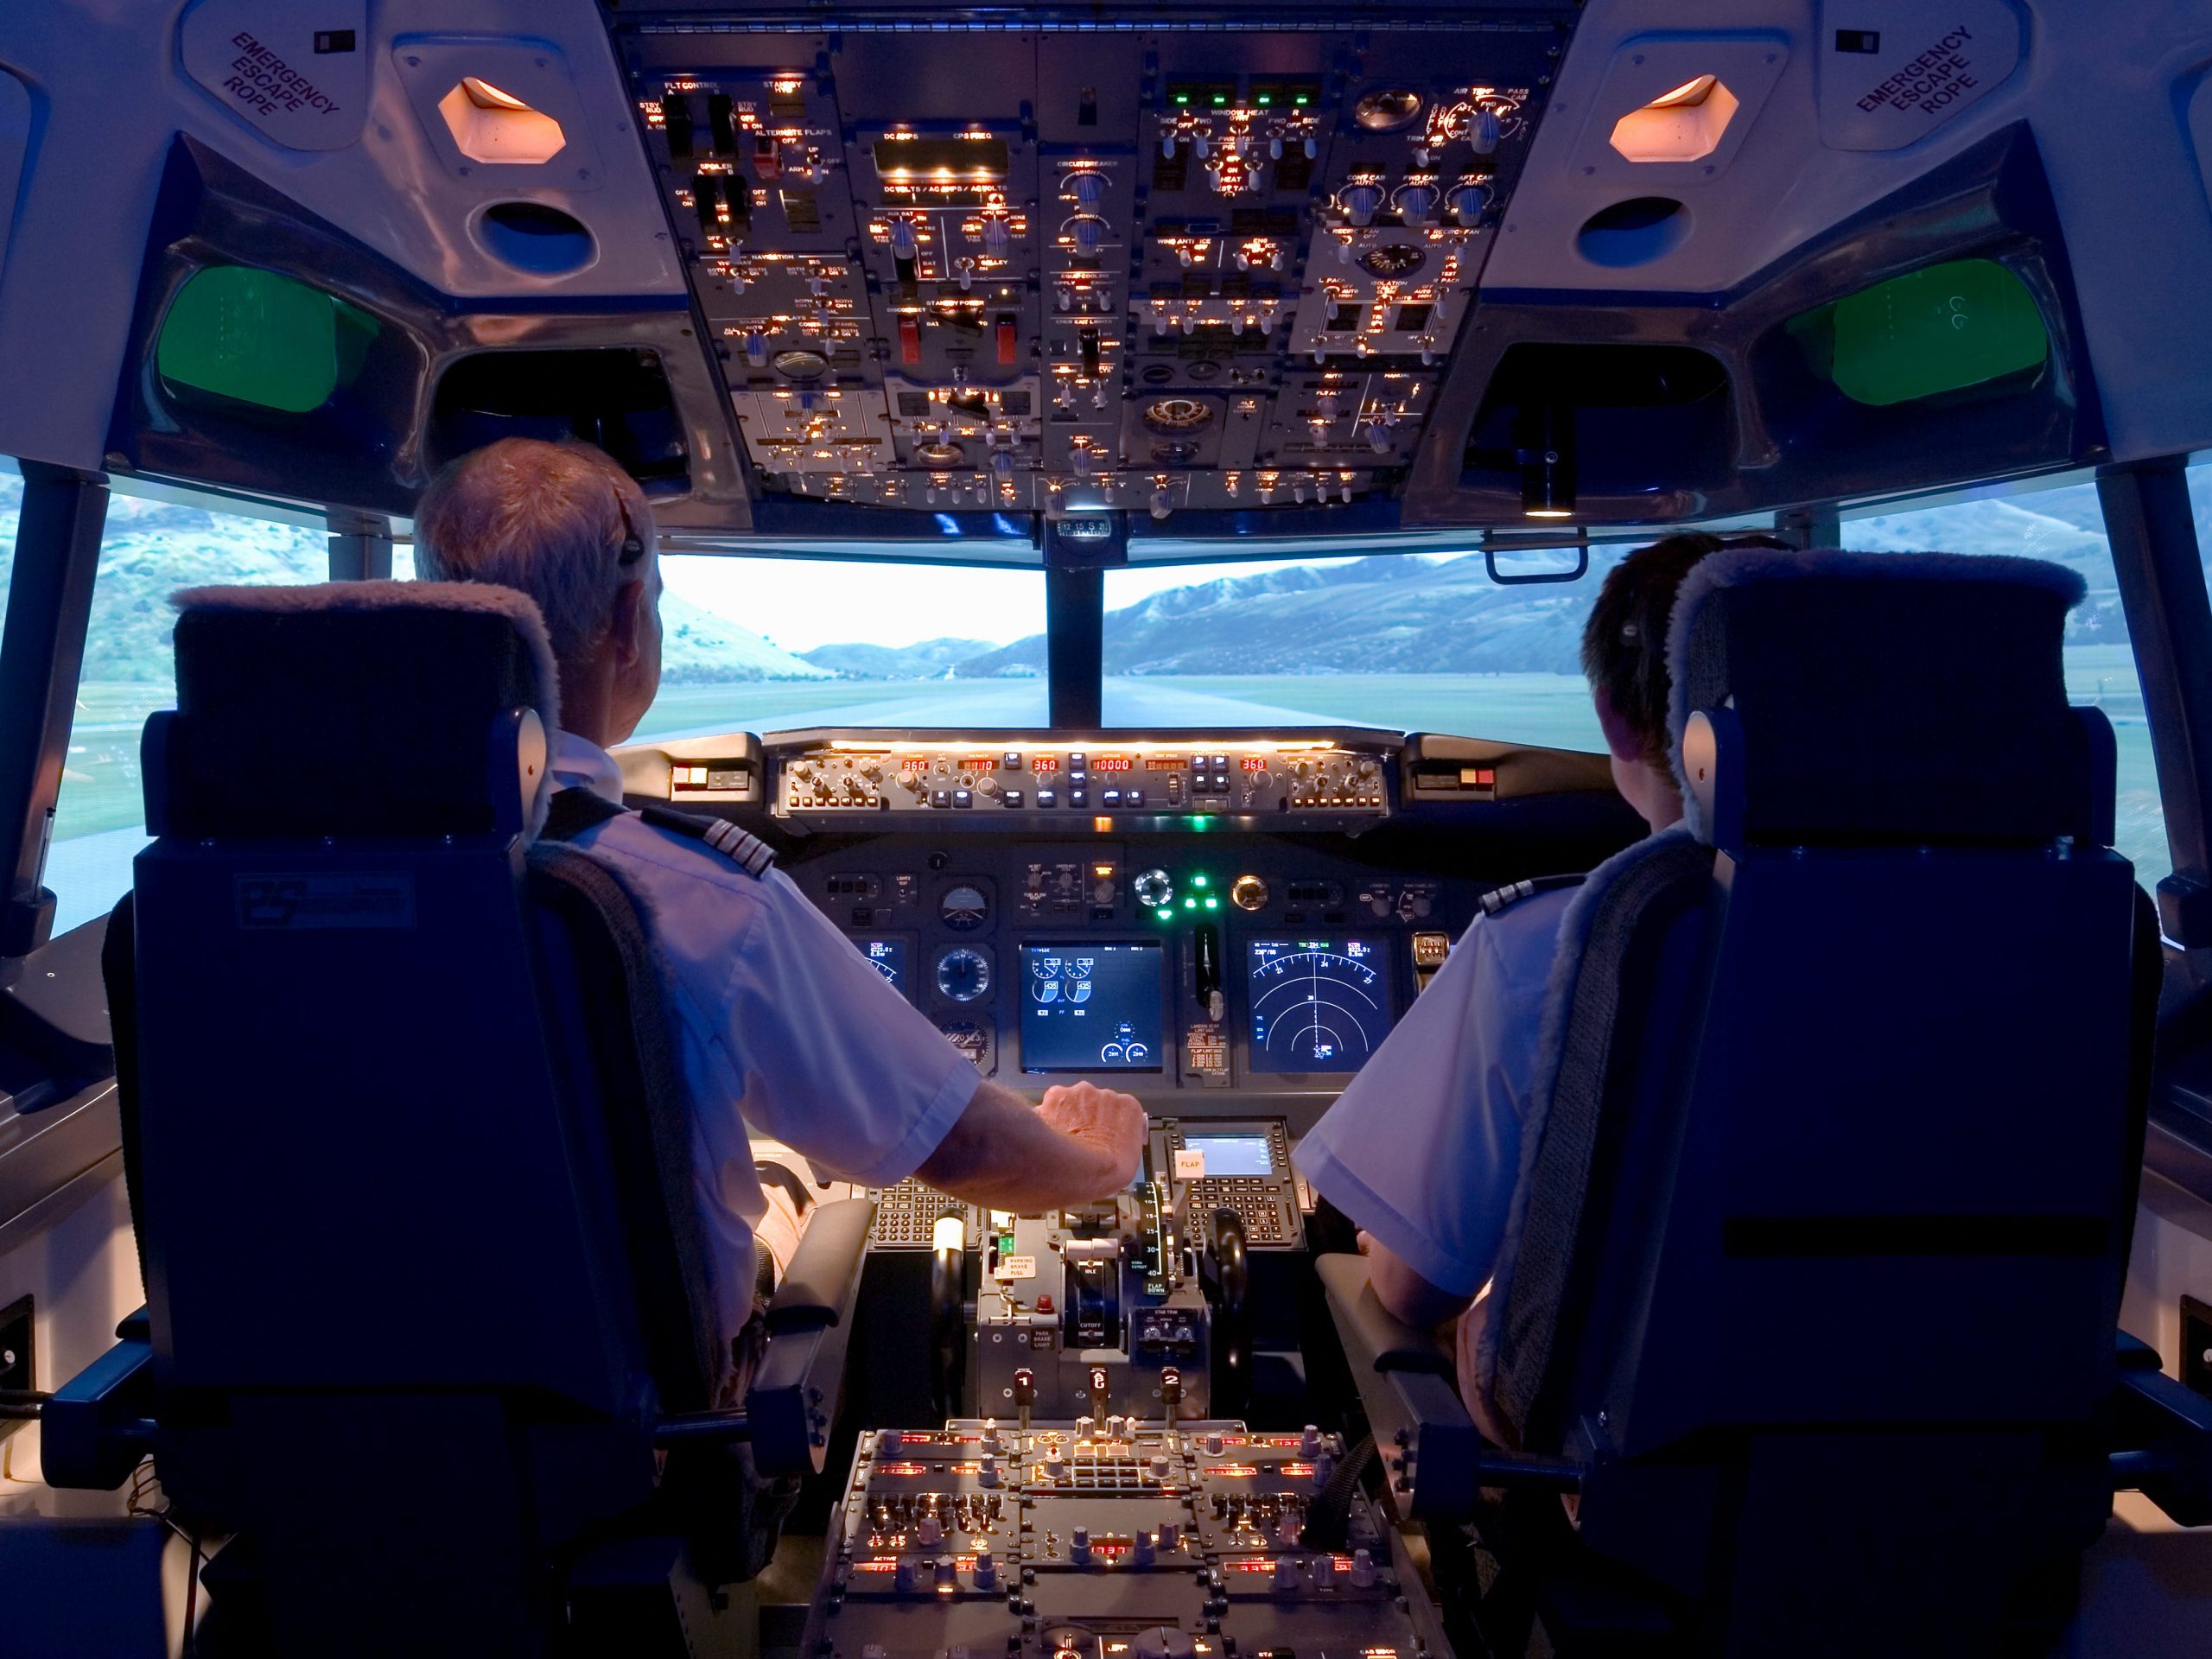 Two pilots sitting in flight simulator, rear view